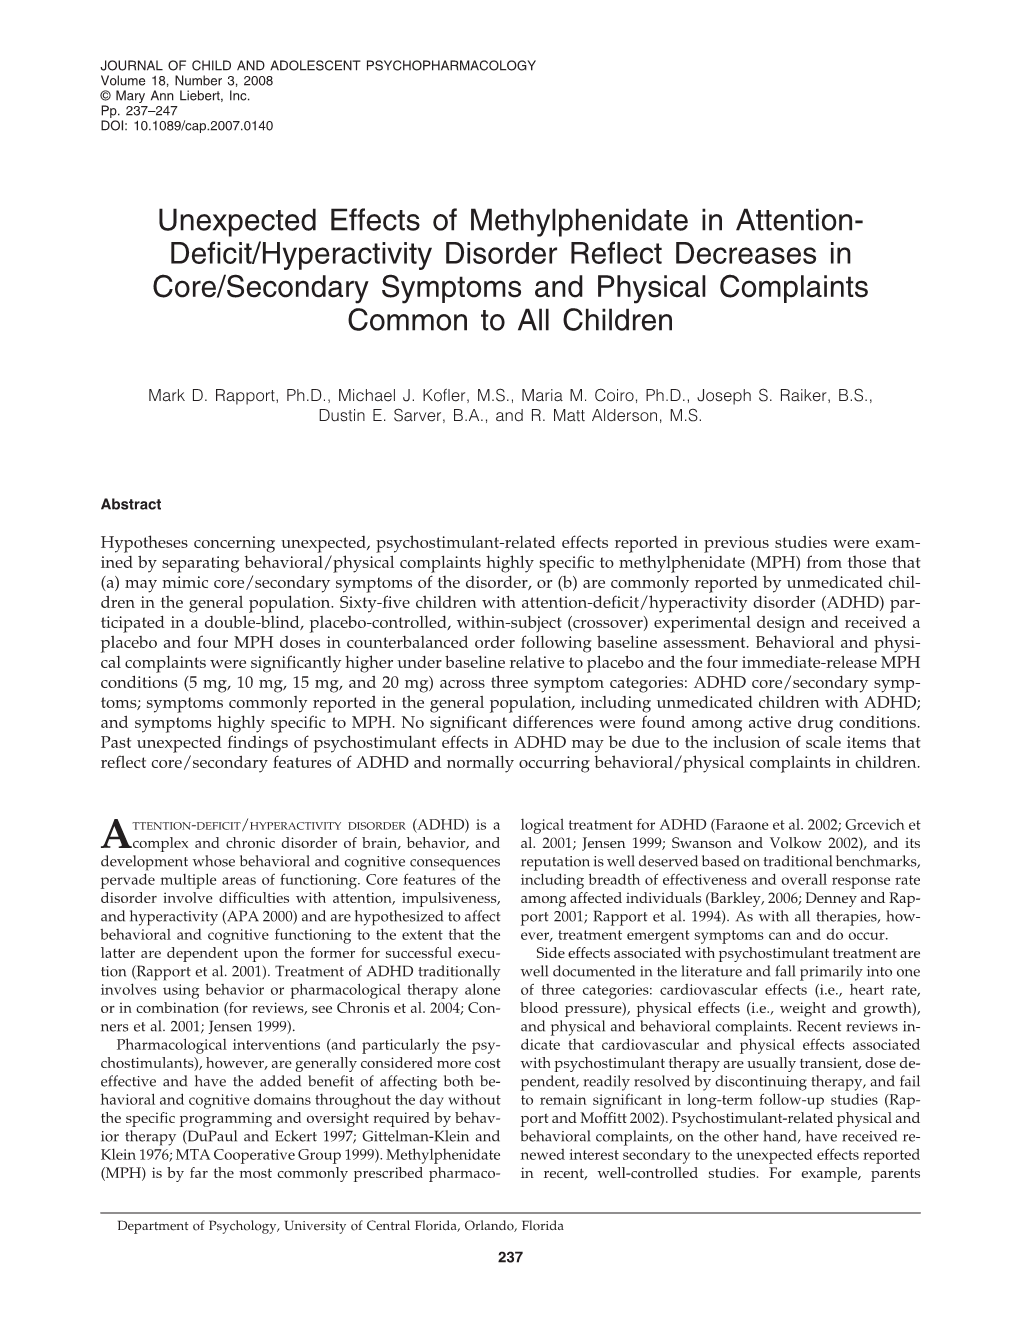 Unexpected Effects of Methylphenidate